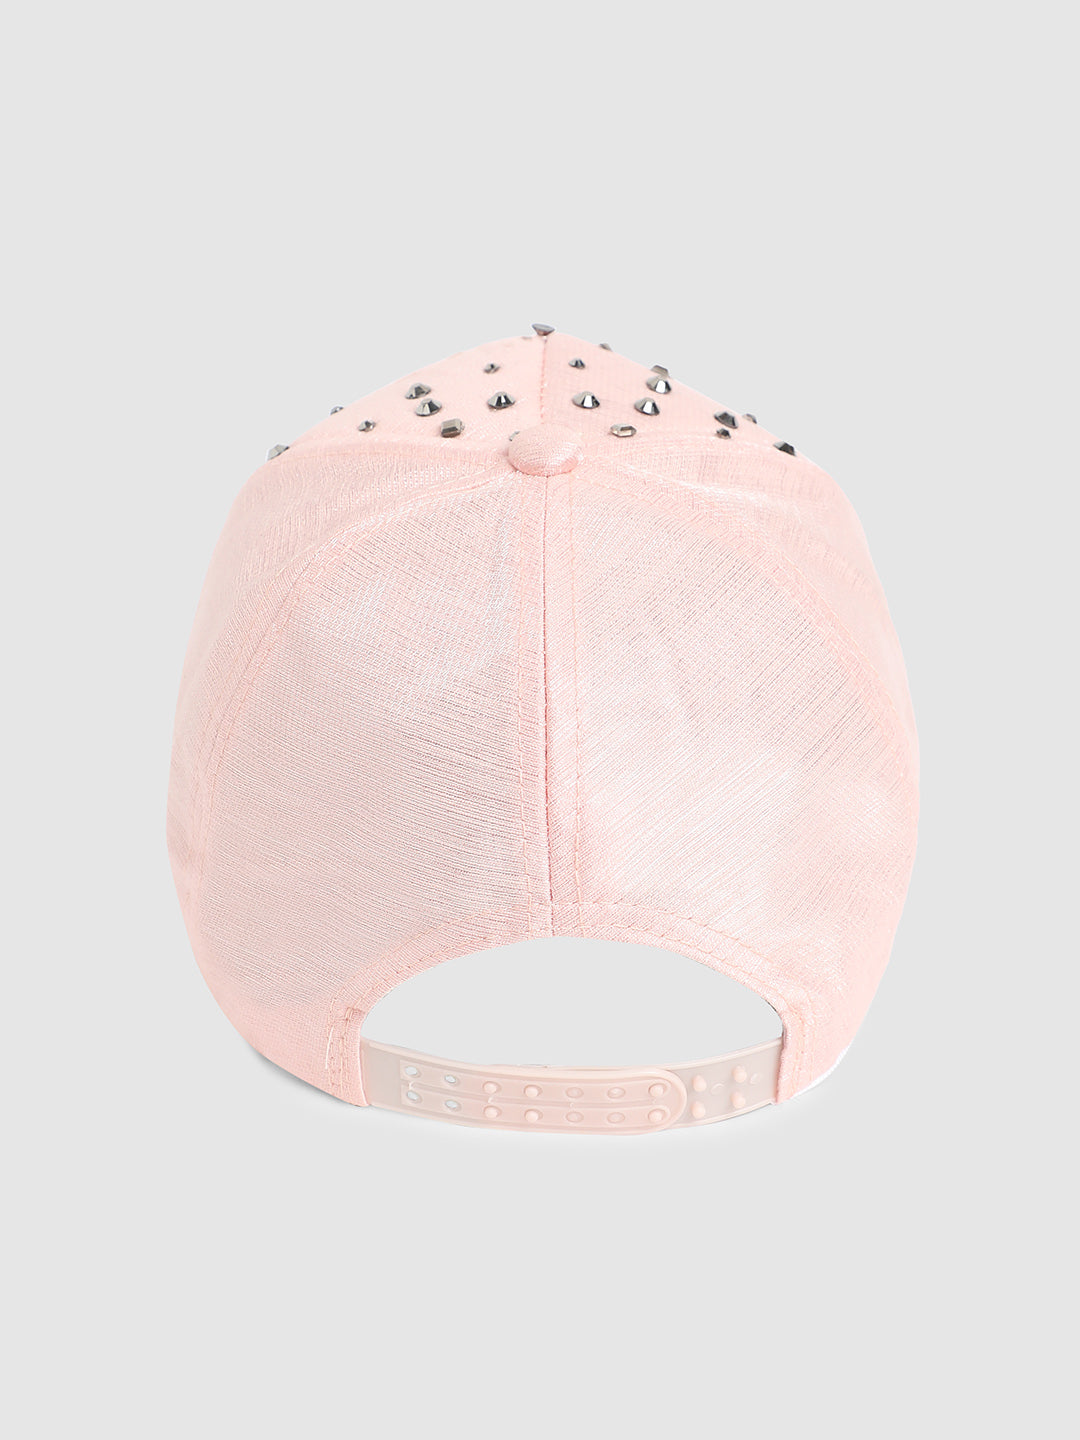 Maxi Studded Baseball Cap - Baby Pink